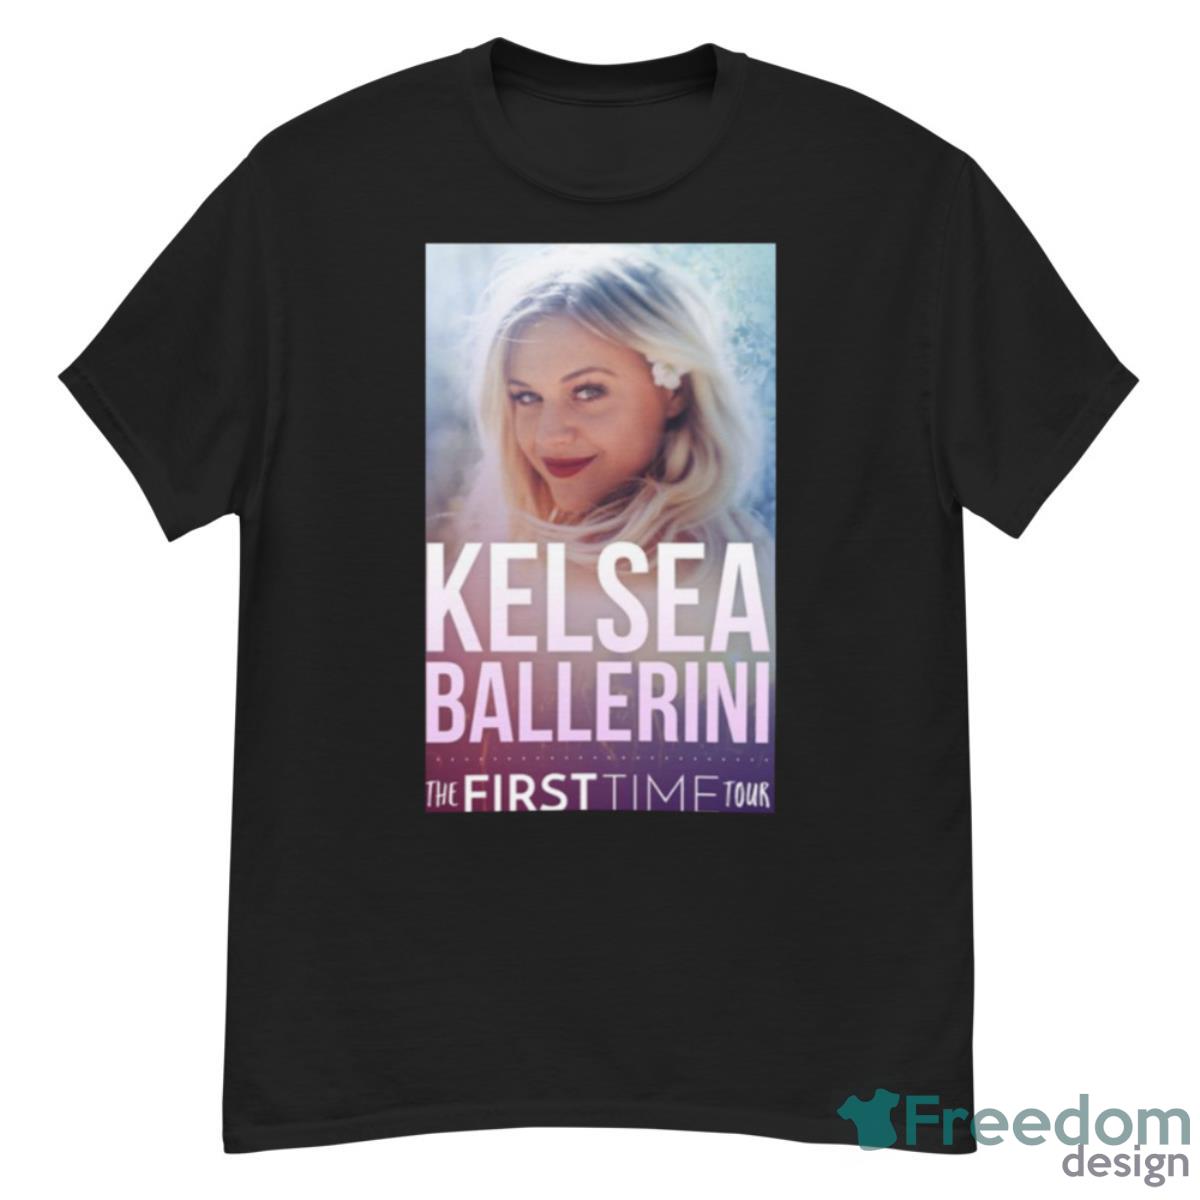 The Firsttime Tour Kelsea Ballerini Shirt - G500 Men’s Classic T-Shirt